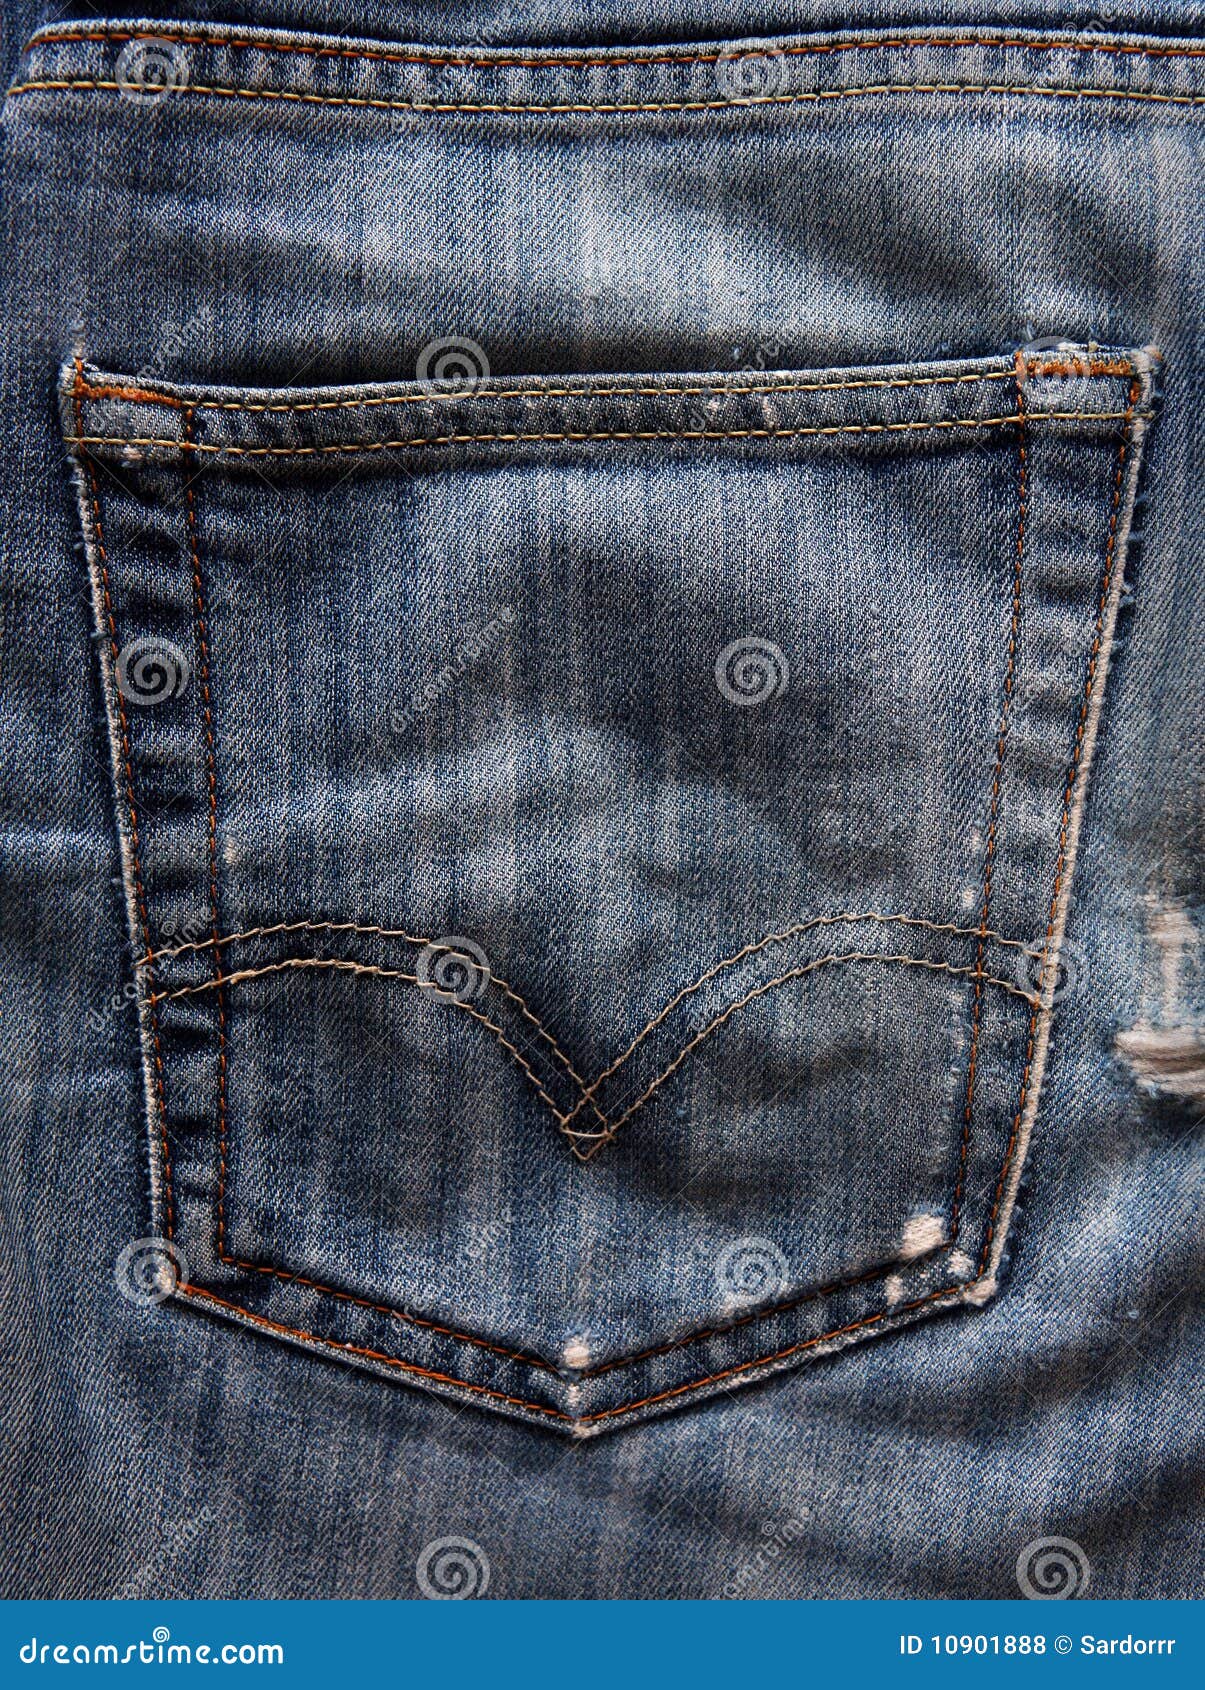 Jeans pocket stock photo. Image of textured, denim, cotton - 10901888